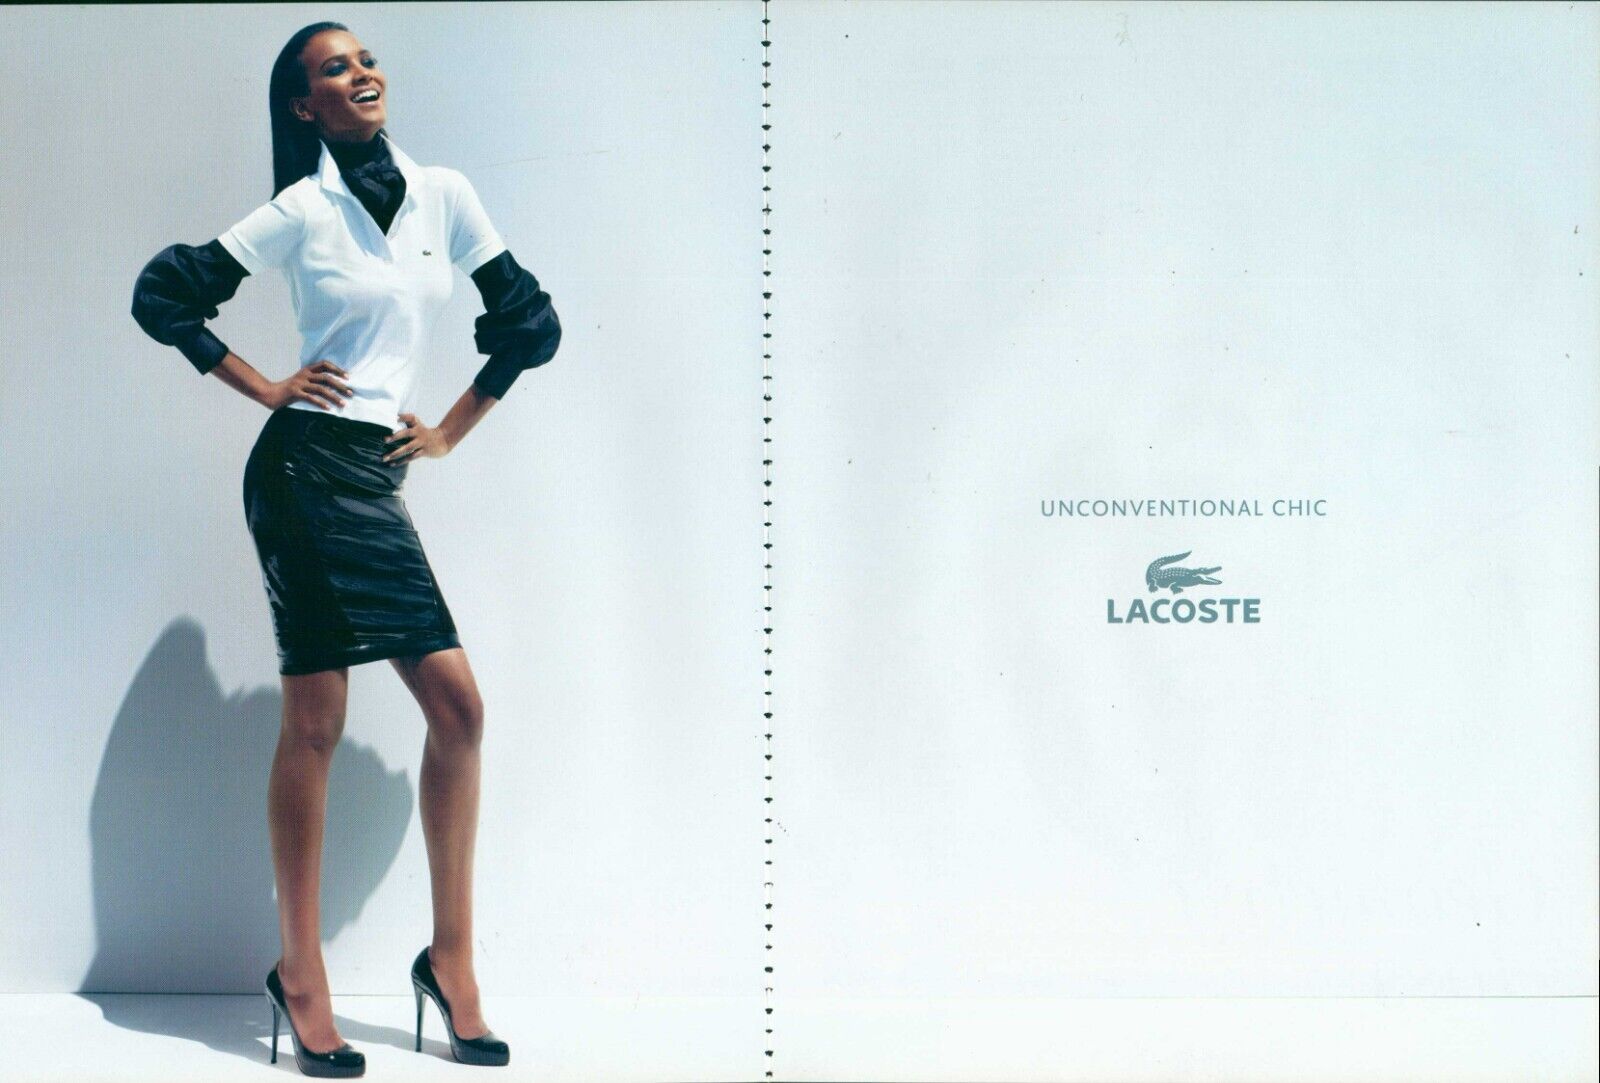 LACOSTE Footwear Magazine Print Ad Advert  long legs high heels shoes 2011